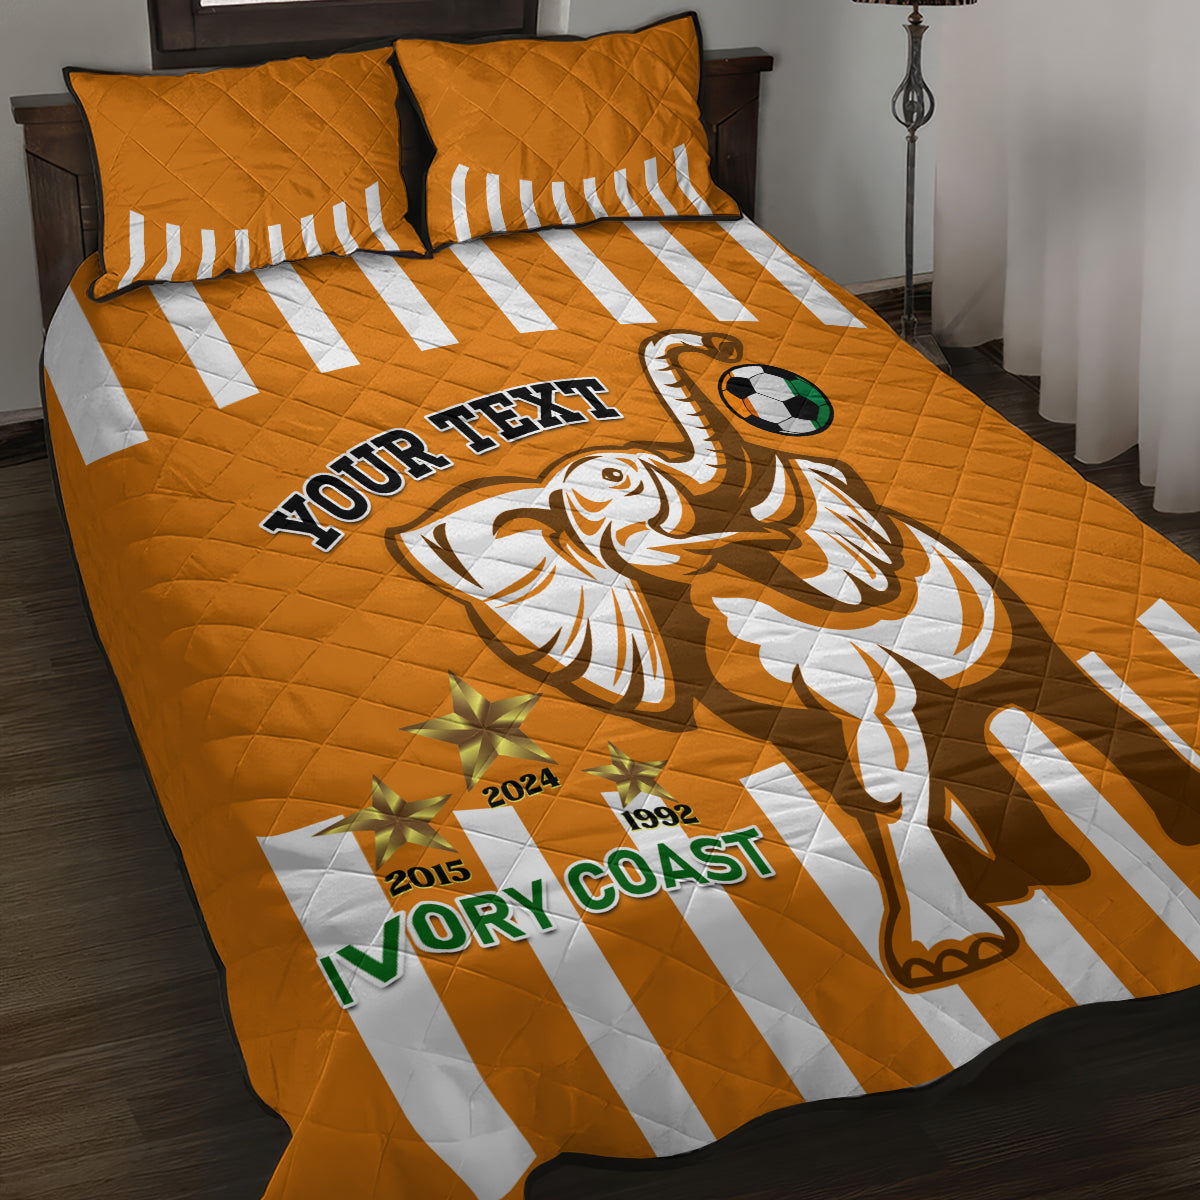 Custom Ivory Coast Football Quilt Bed Set Les Elephants 3rd Champions Proud